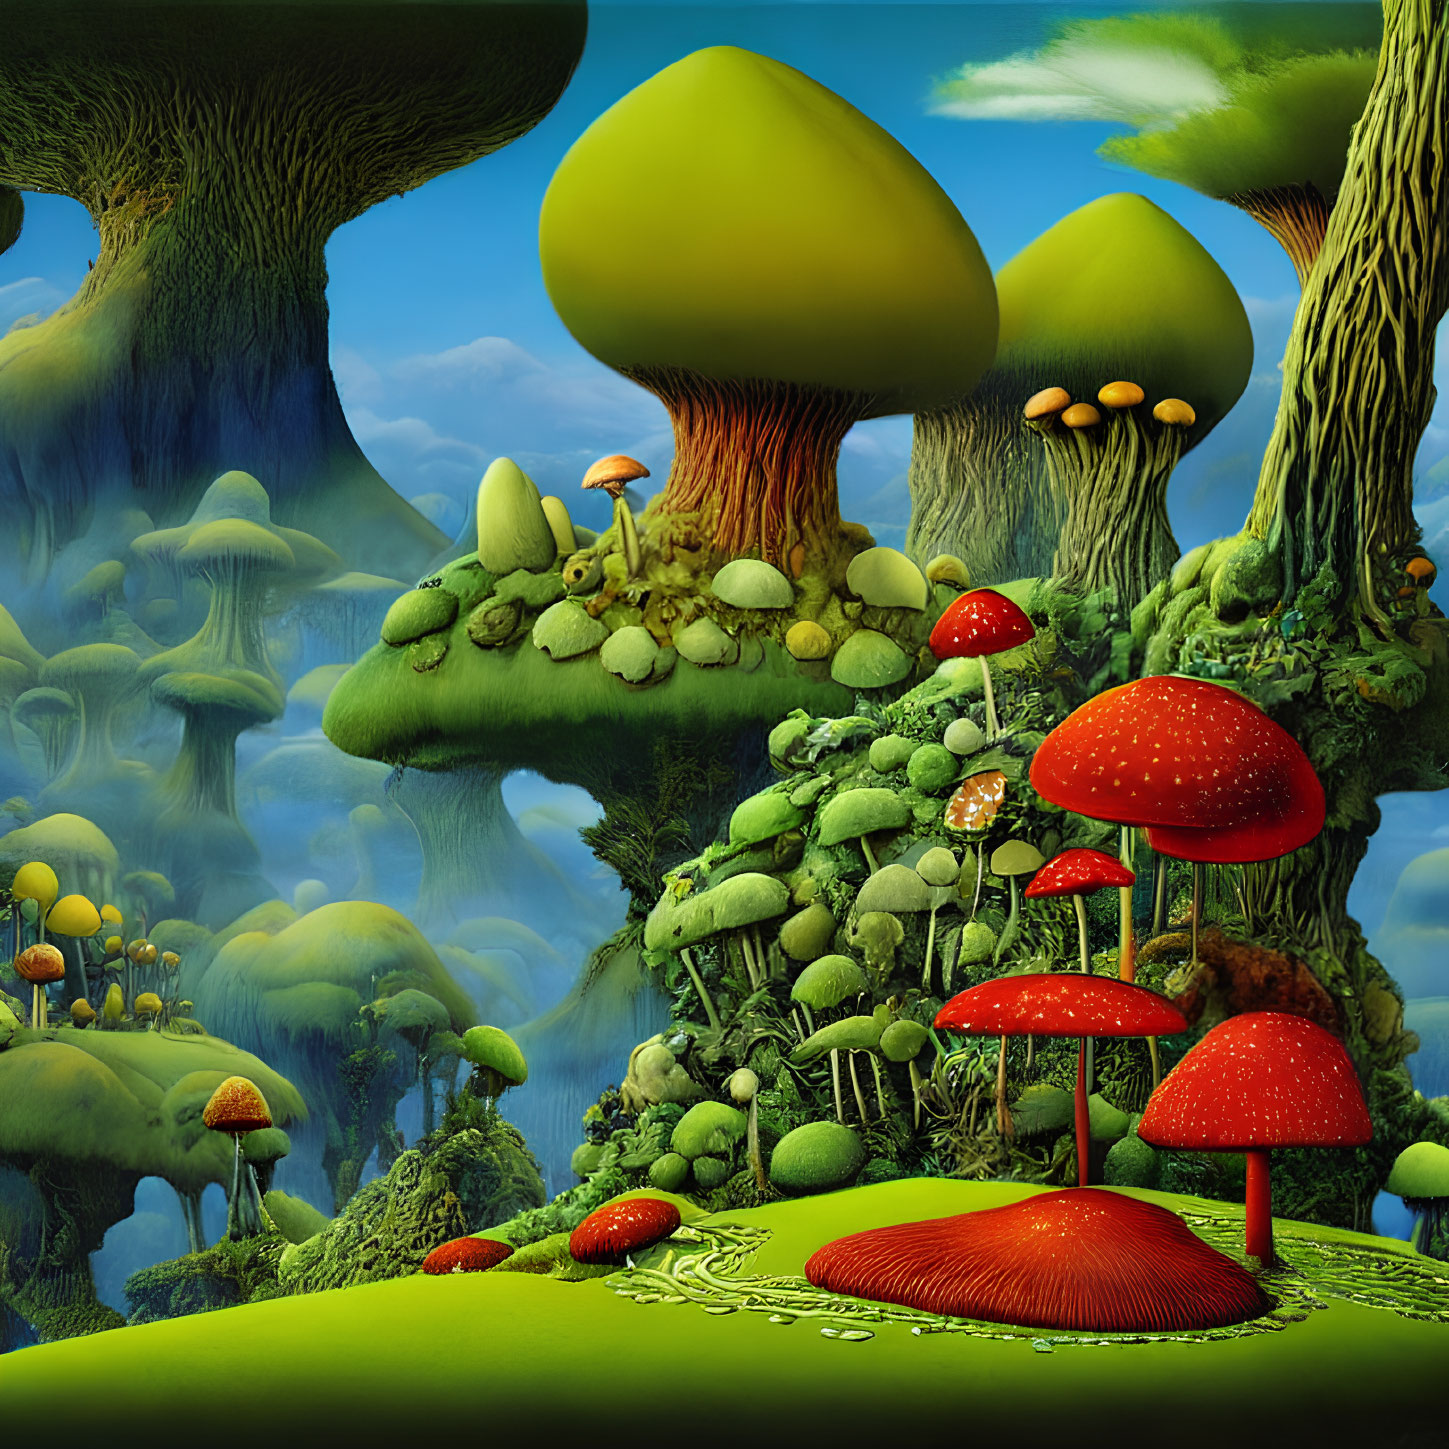 Colorful Mushroom and Tree Landscape Against Blue Sky